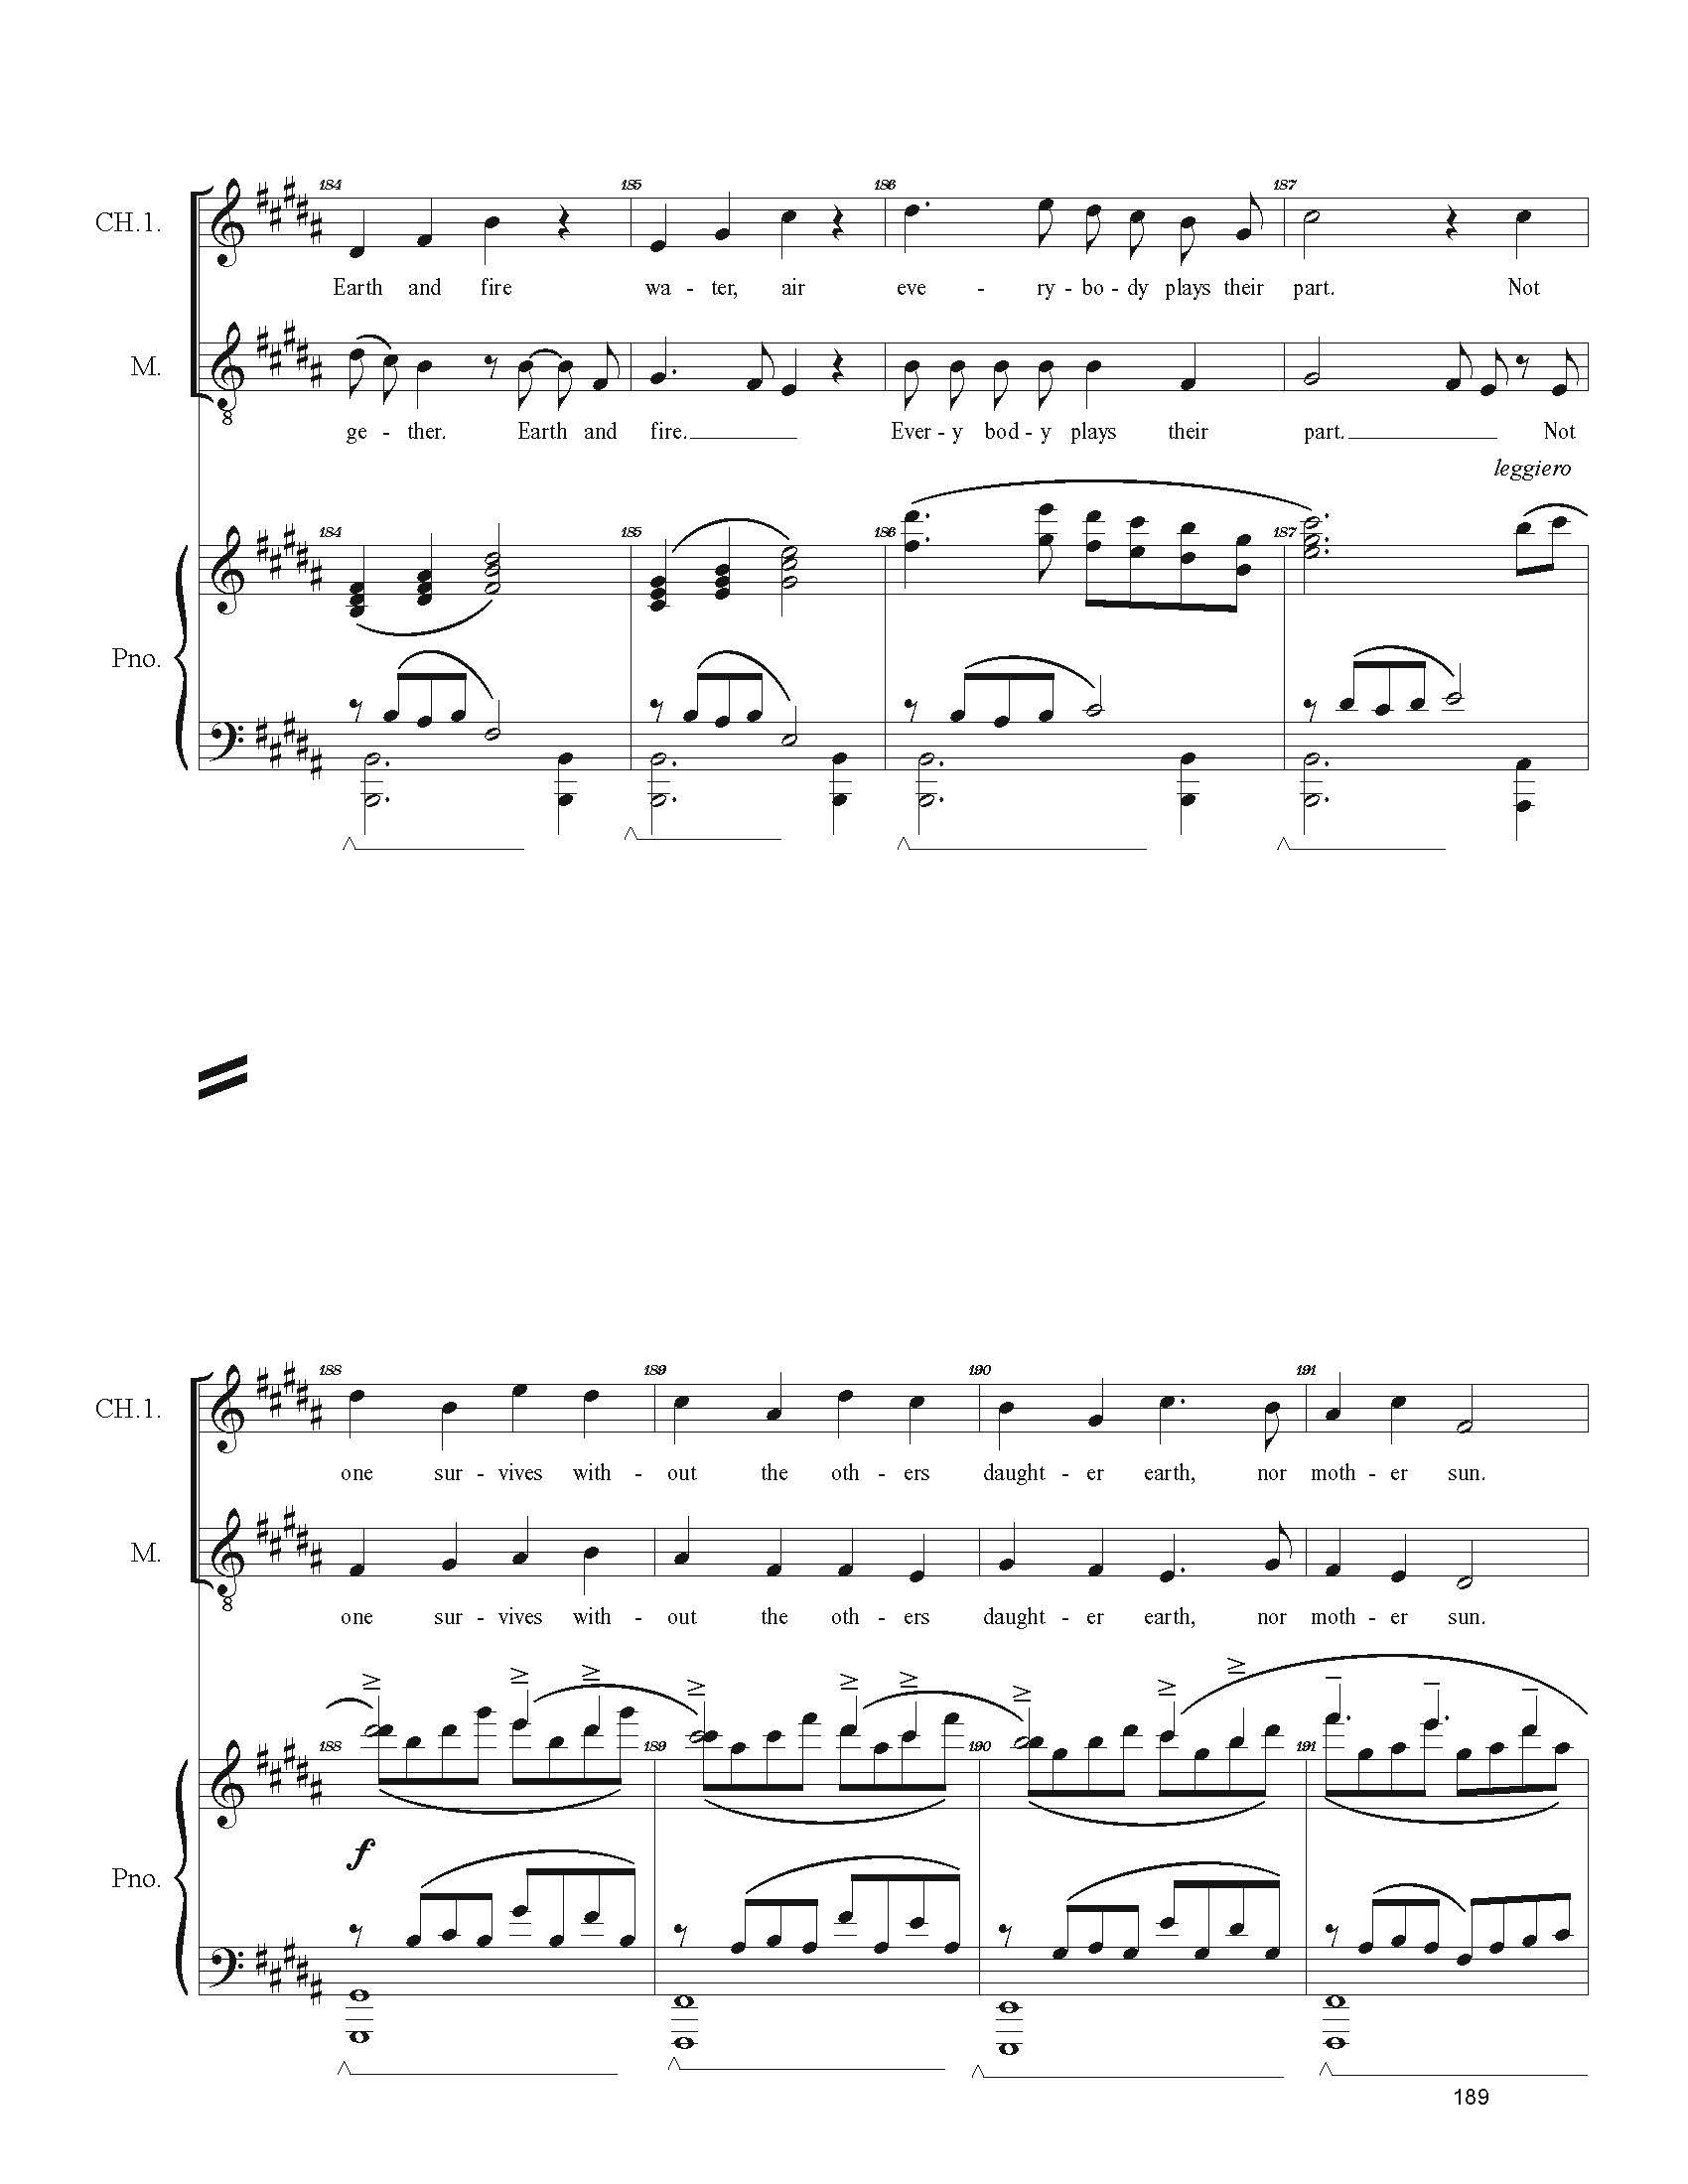 FULL PIANO VOCAL SCORE DRAFT 1 - Score_Page_189.jpg